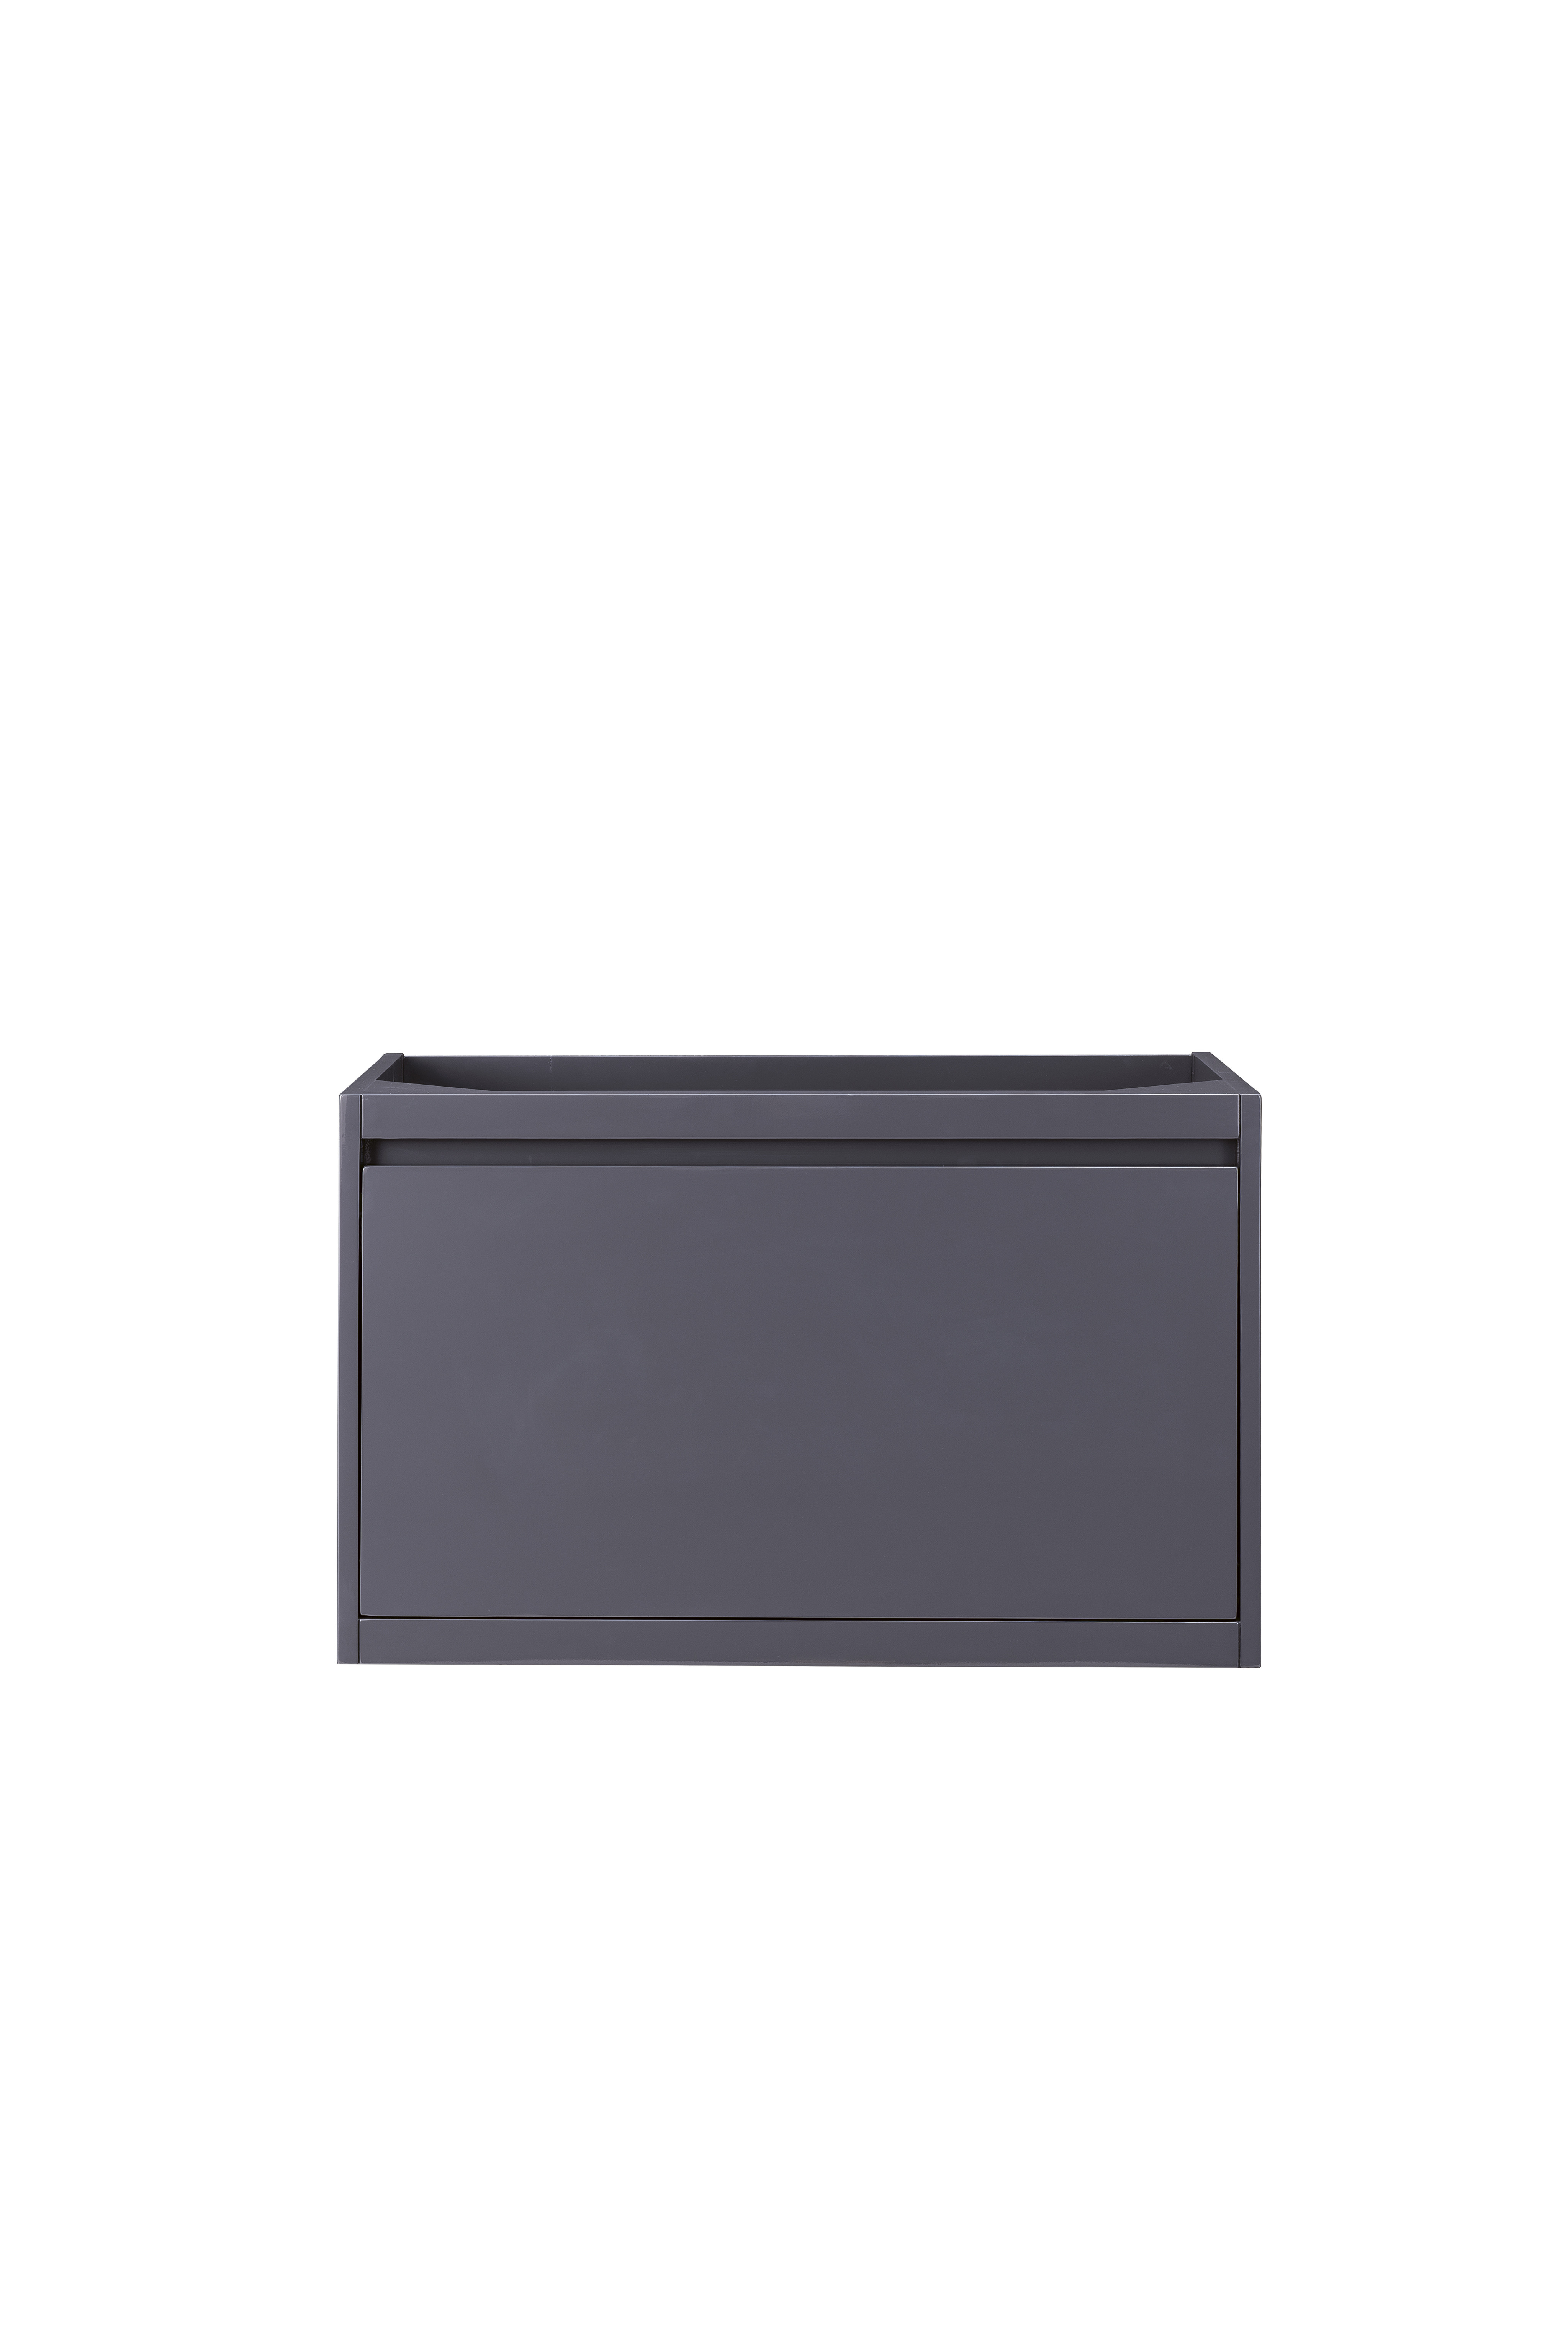 James Martin 801-V31.5-MGG Milan 31.5" Single Vanity Cabinet, Modern Grey Glossy